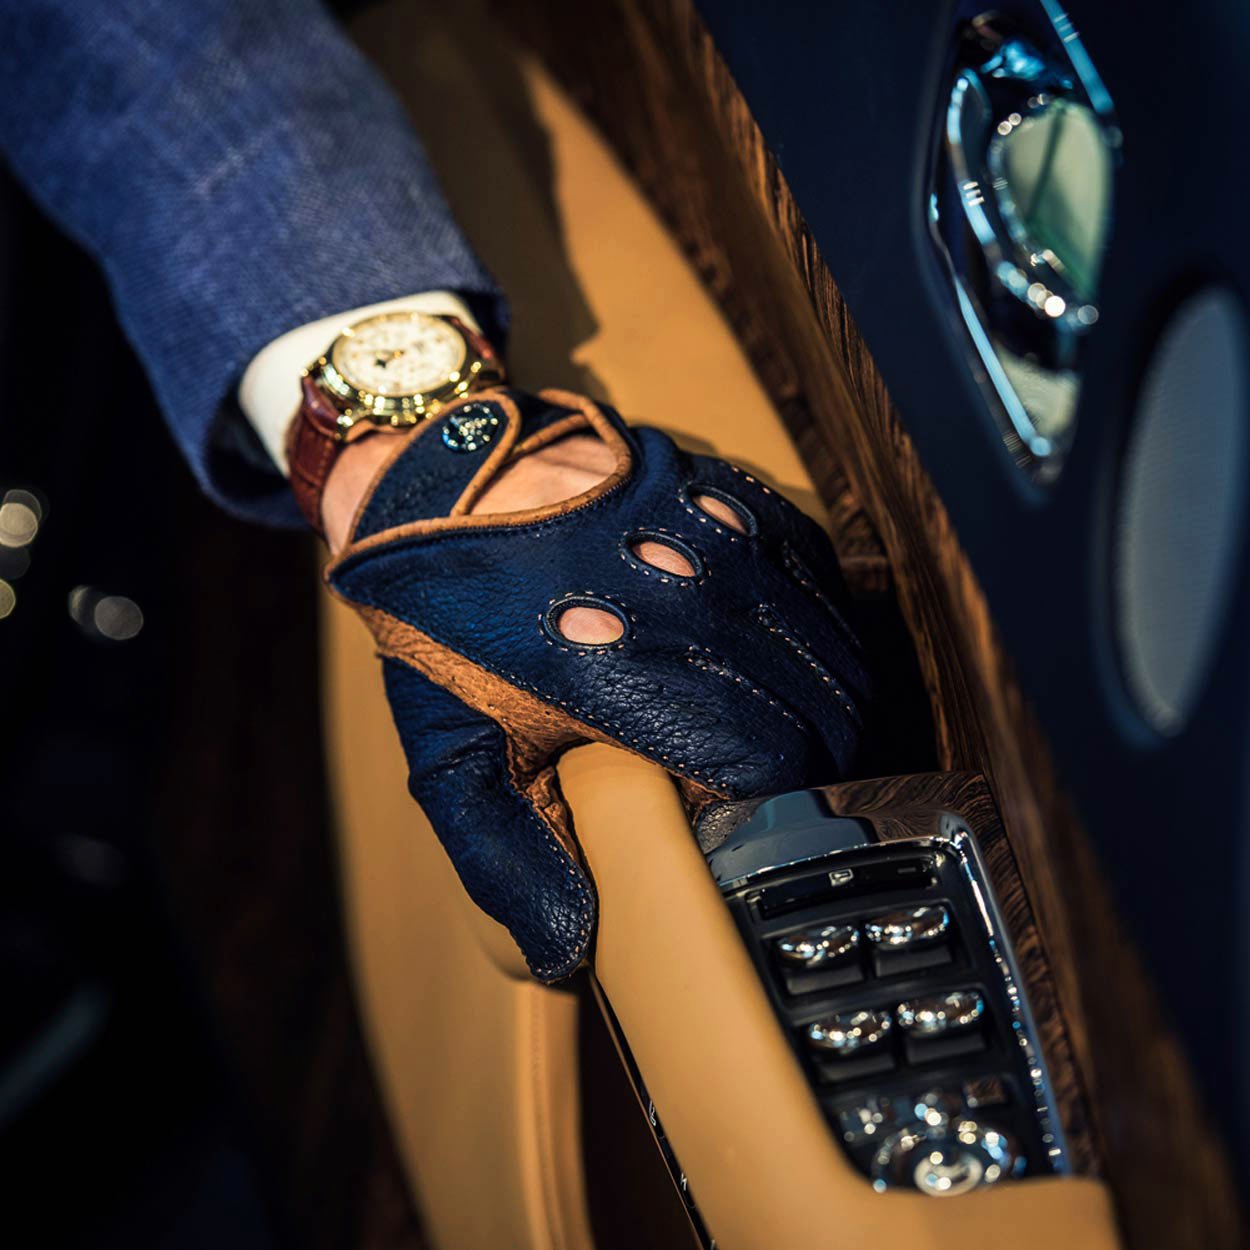 Blu notte blue driving gloves - Opinari - Driver's Essentials